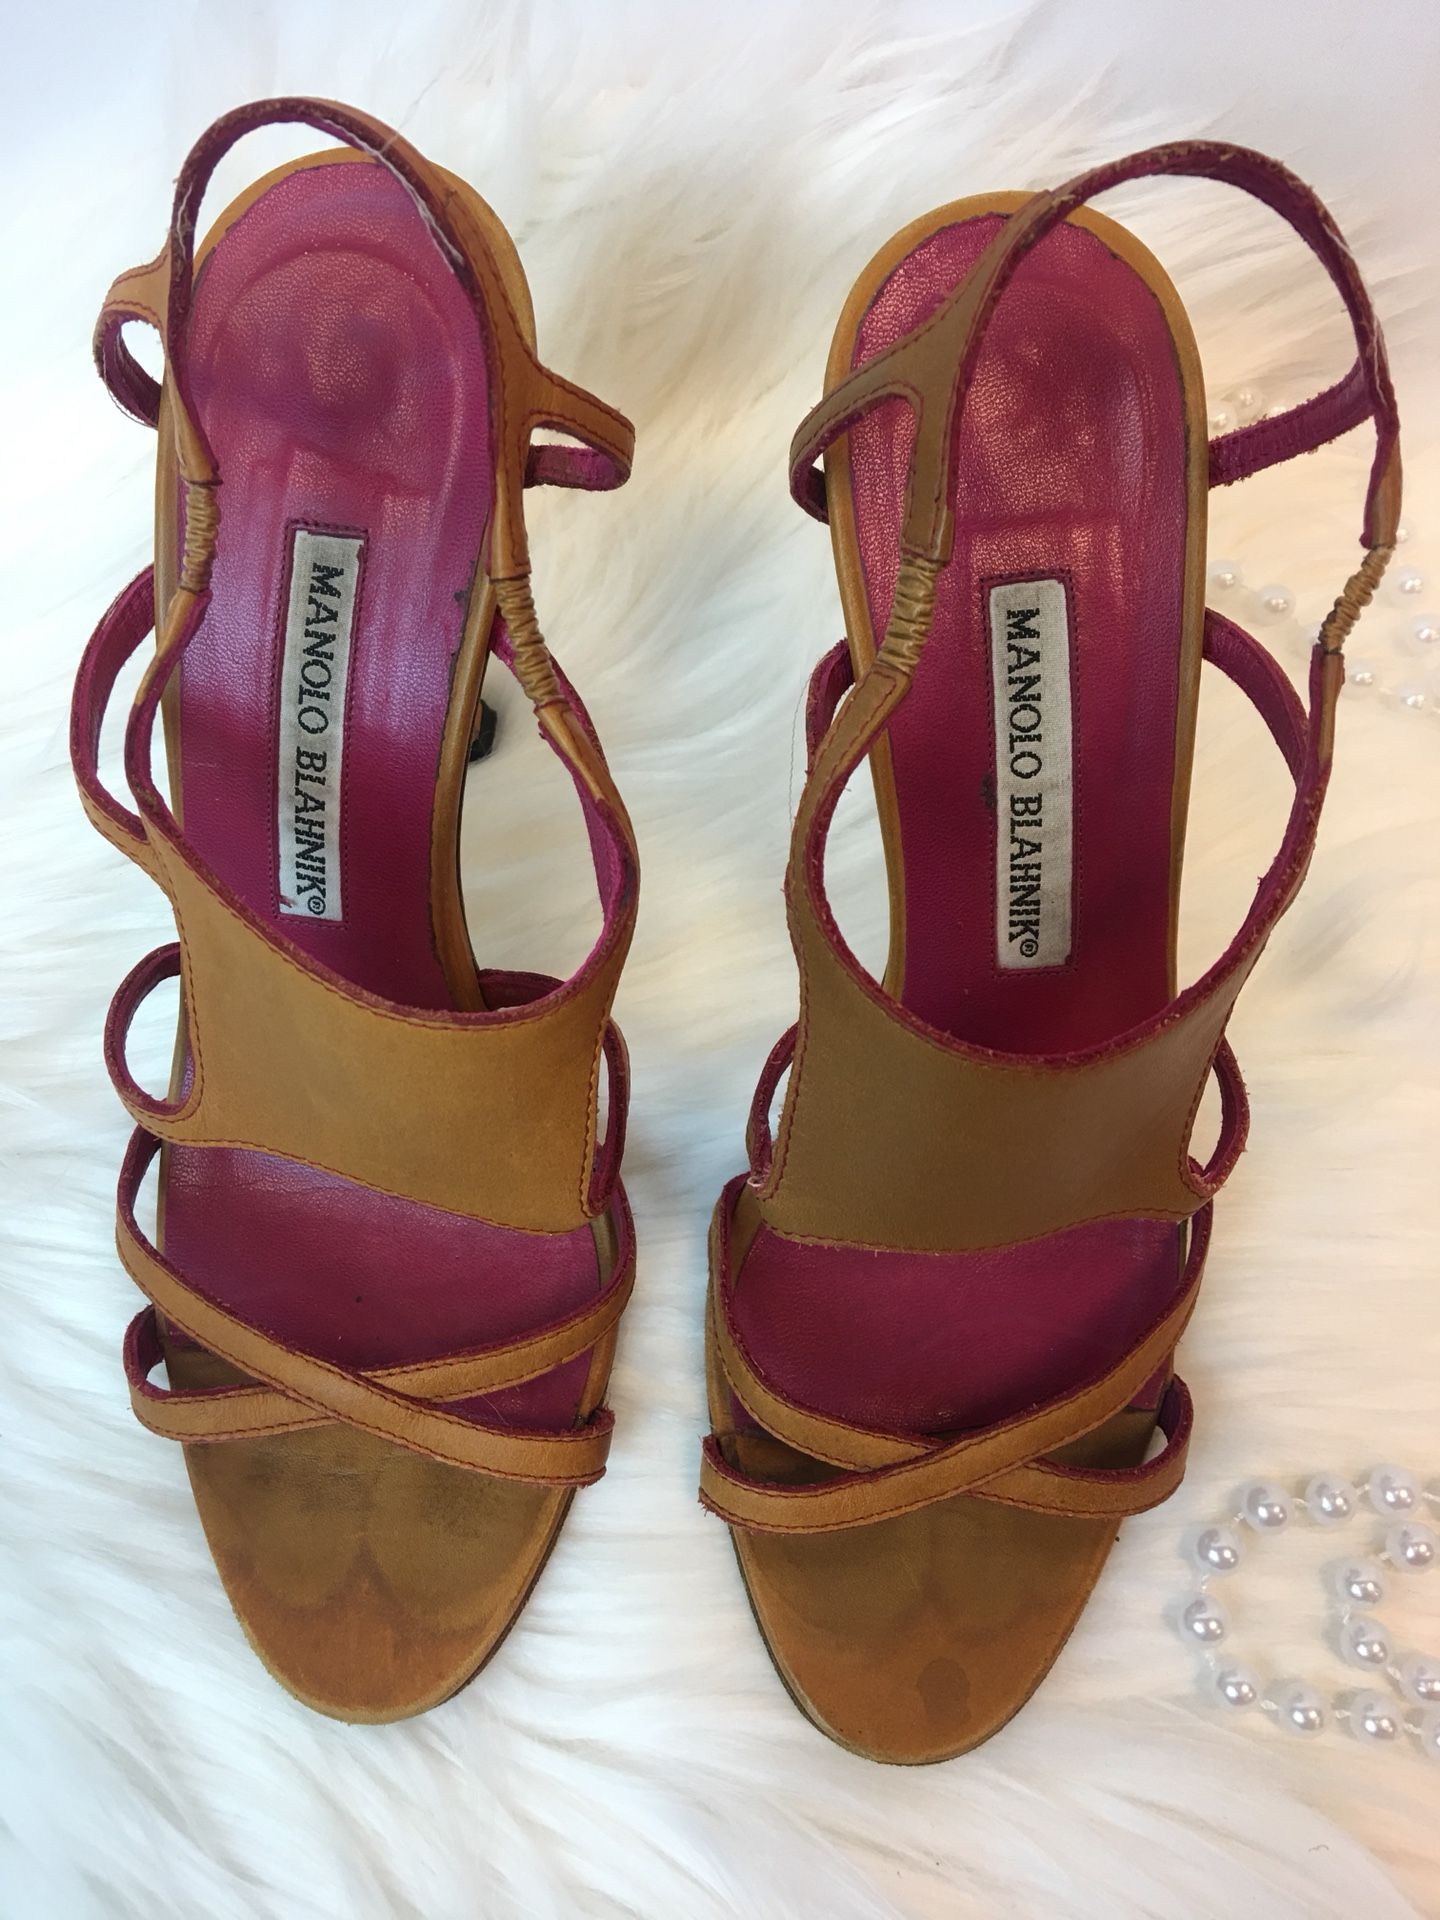 Jimmy Choo orange and pink heels size 35.5